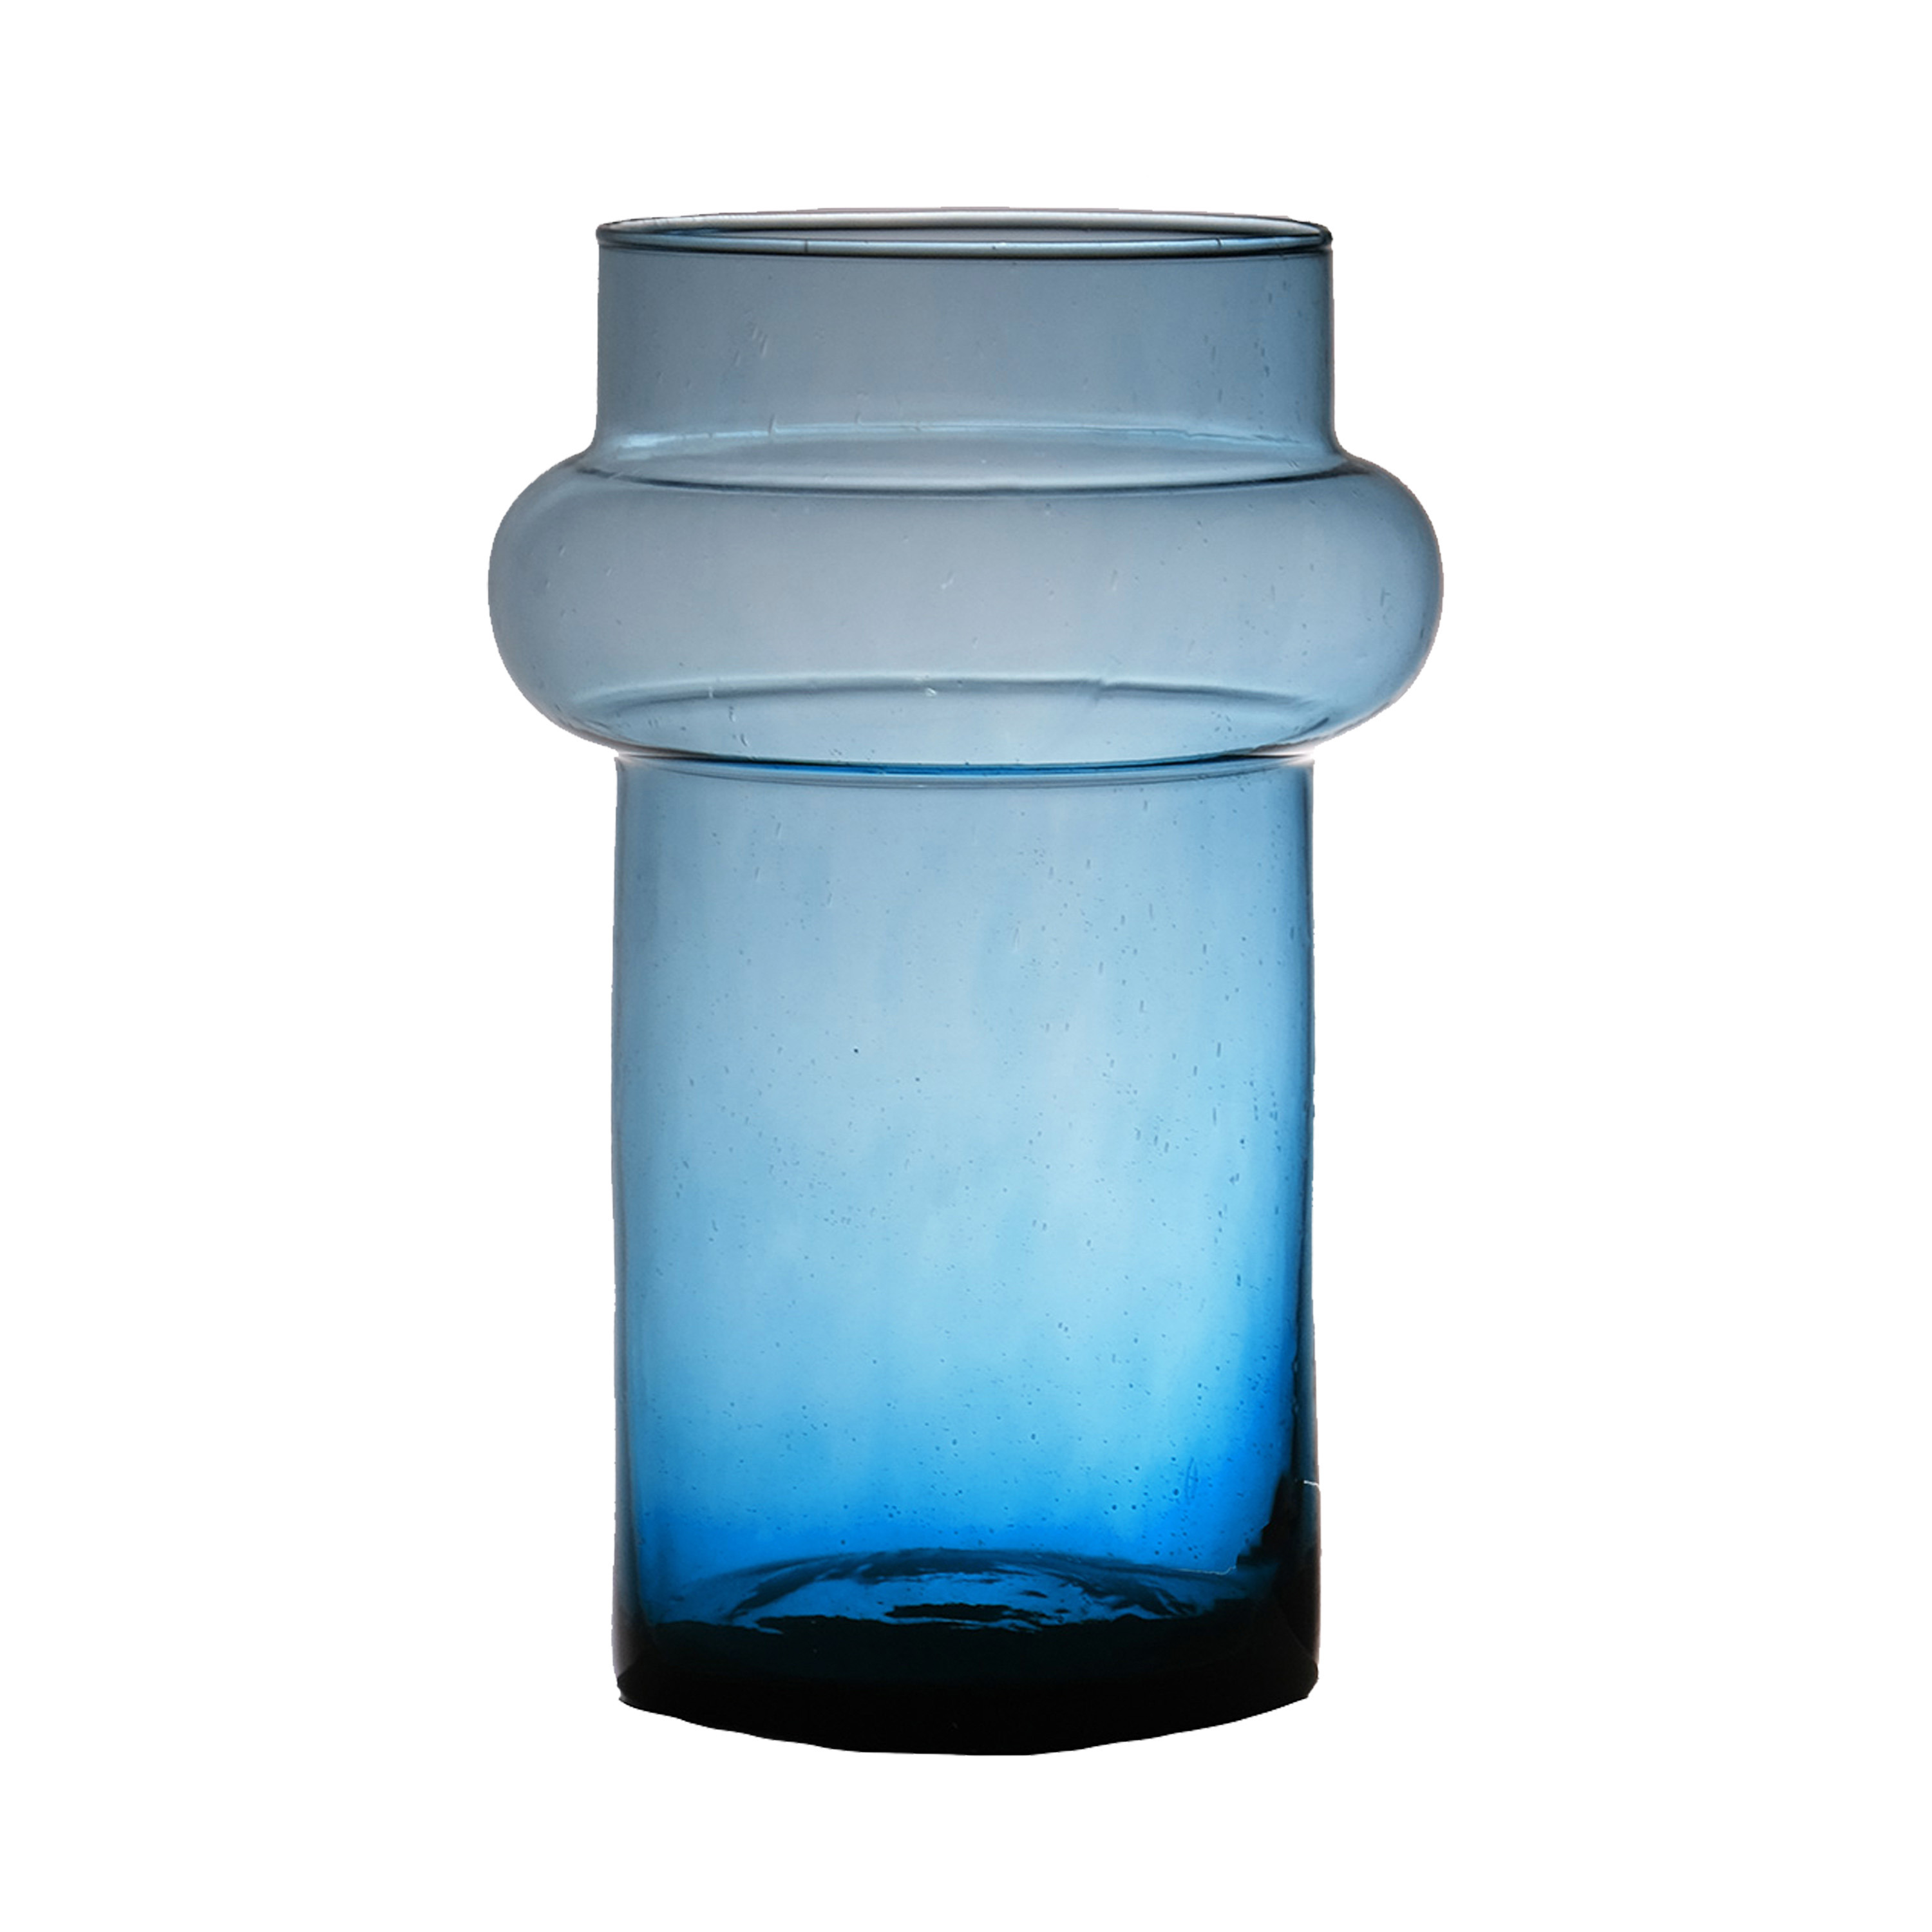 Hakbijl Glass Bloemenvaas Luna transparant blauw eco glas D16 x H25 cm cilinder vaas